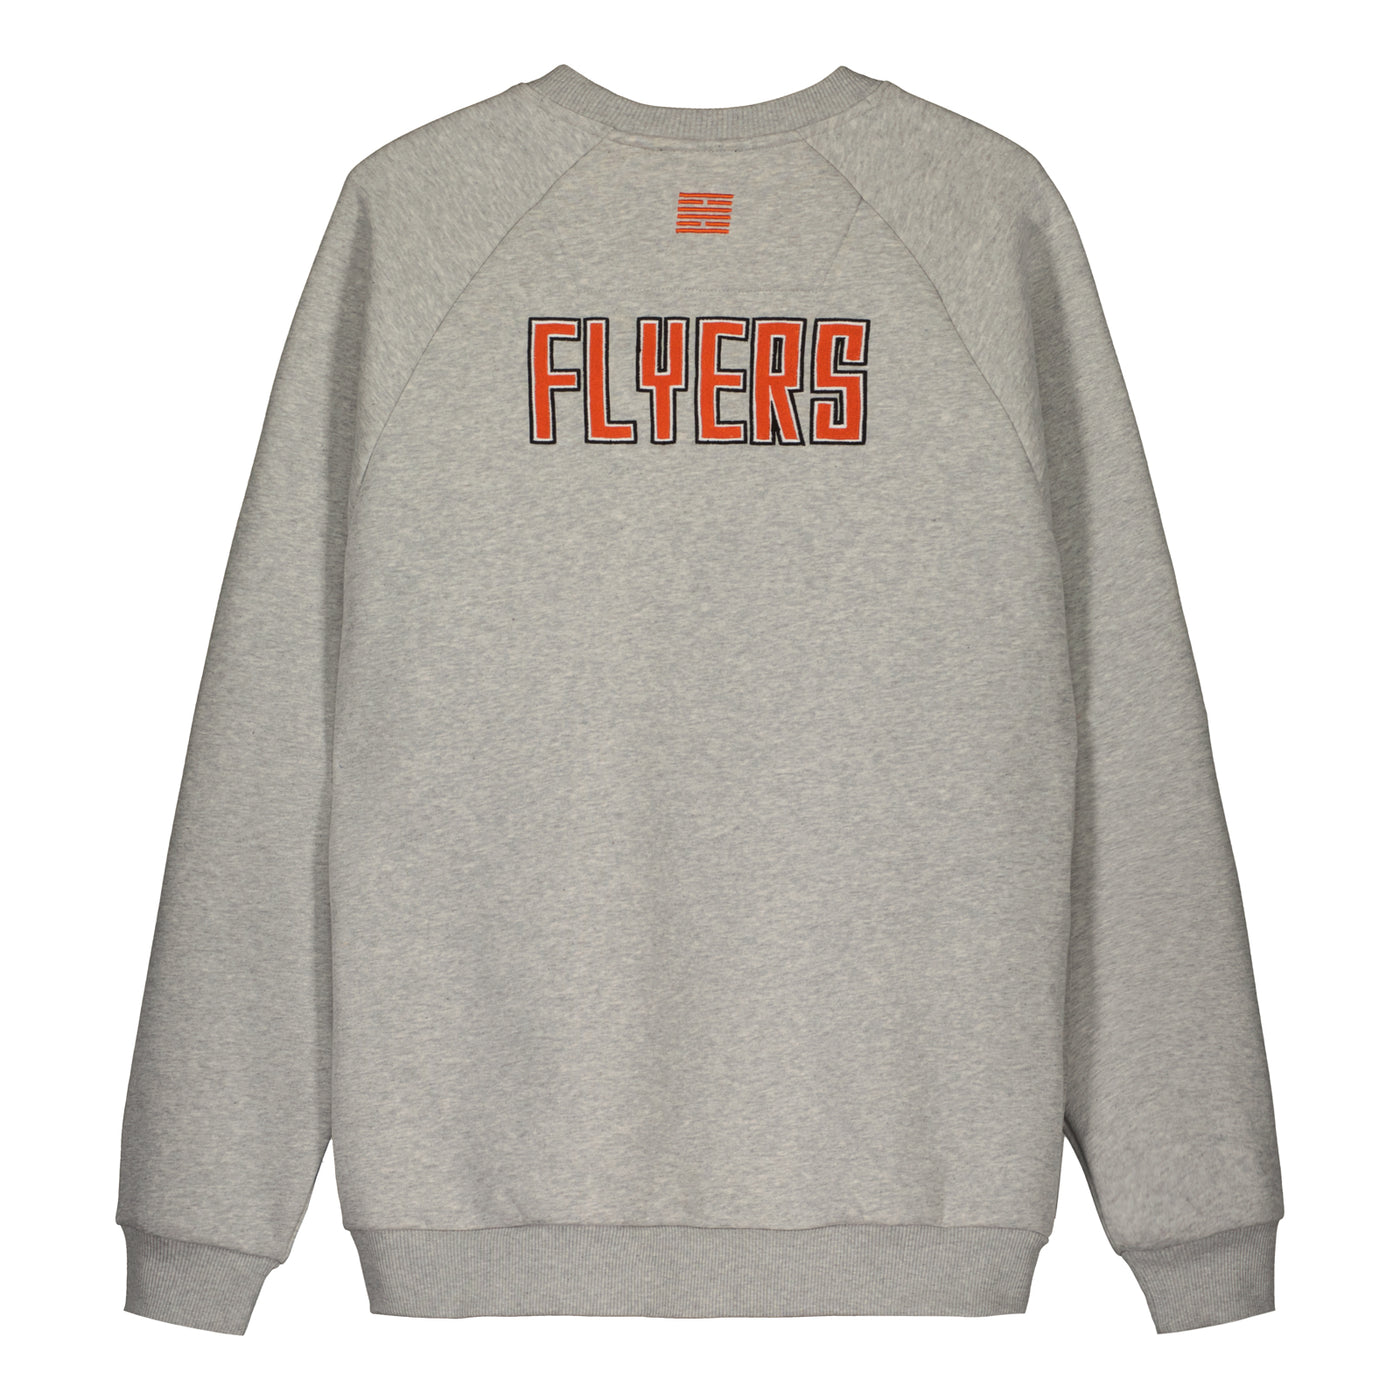 Flyers team sweatshirt